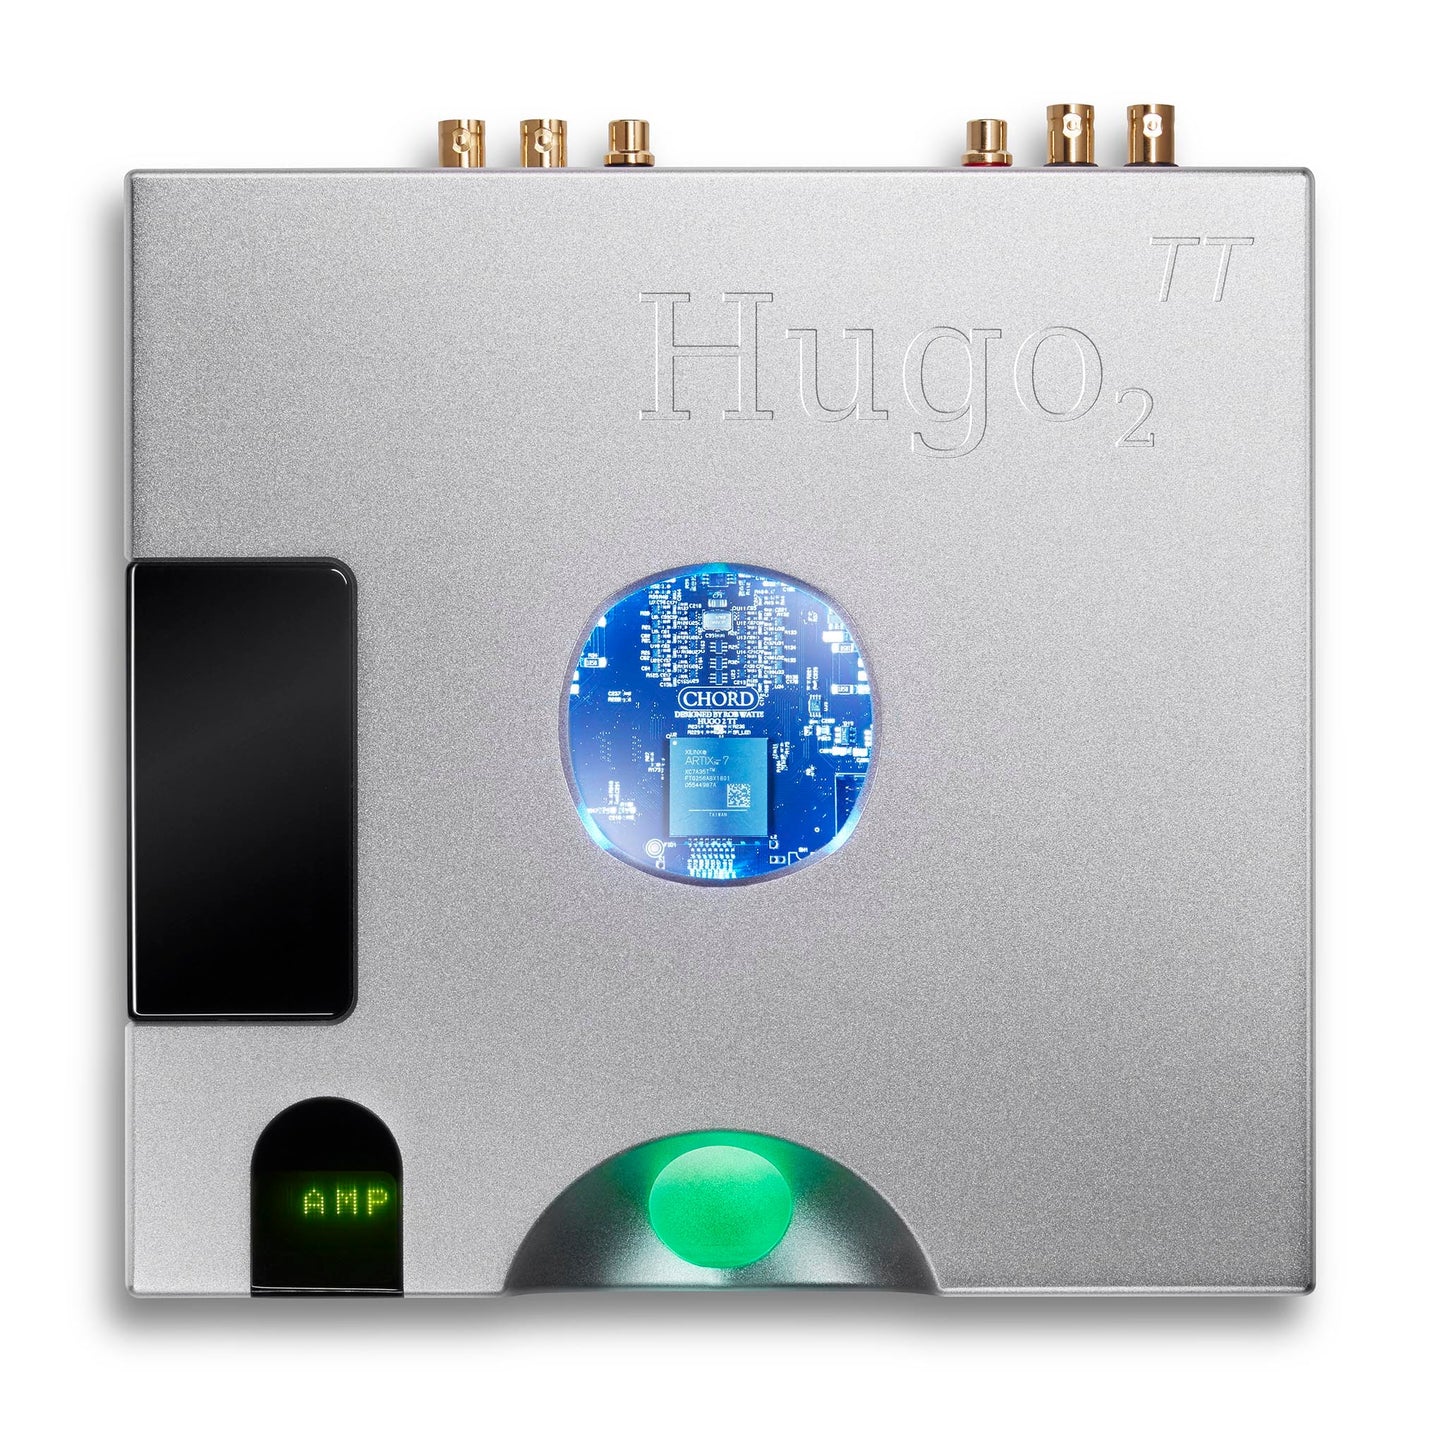 Chord Hugo TT 2 DAC / Headphone Amplifier / Preamplifier (OPEN)